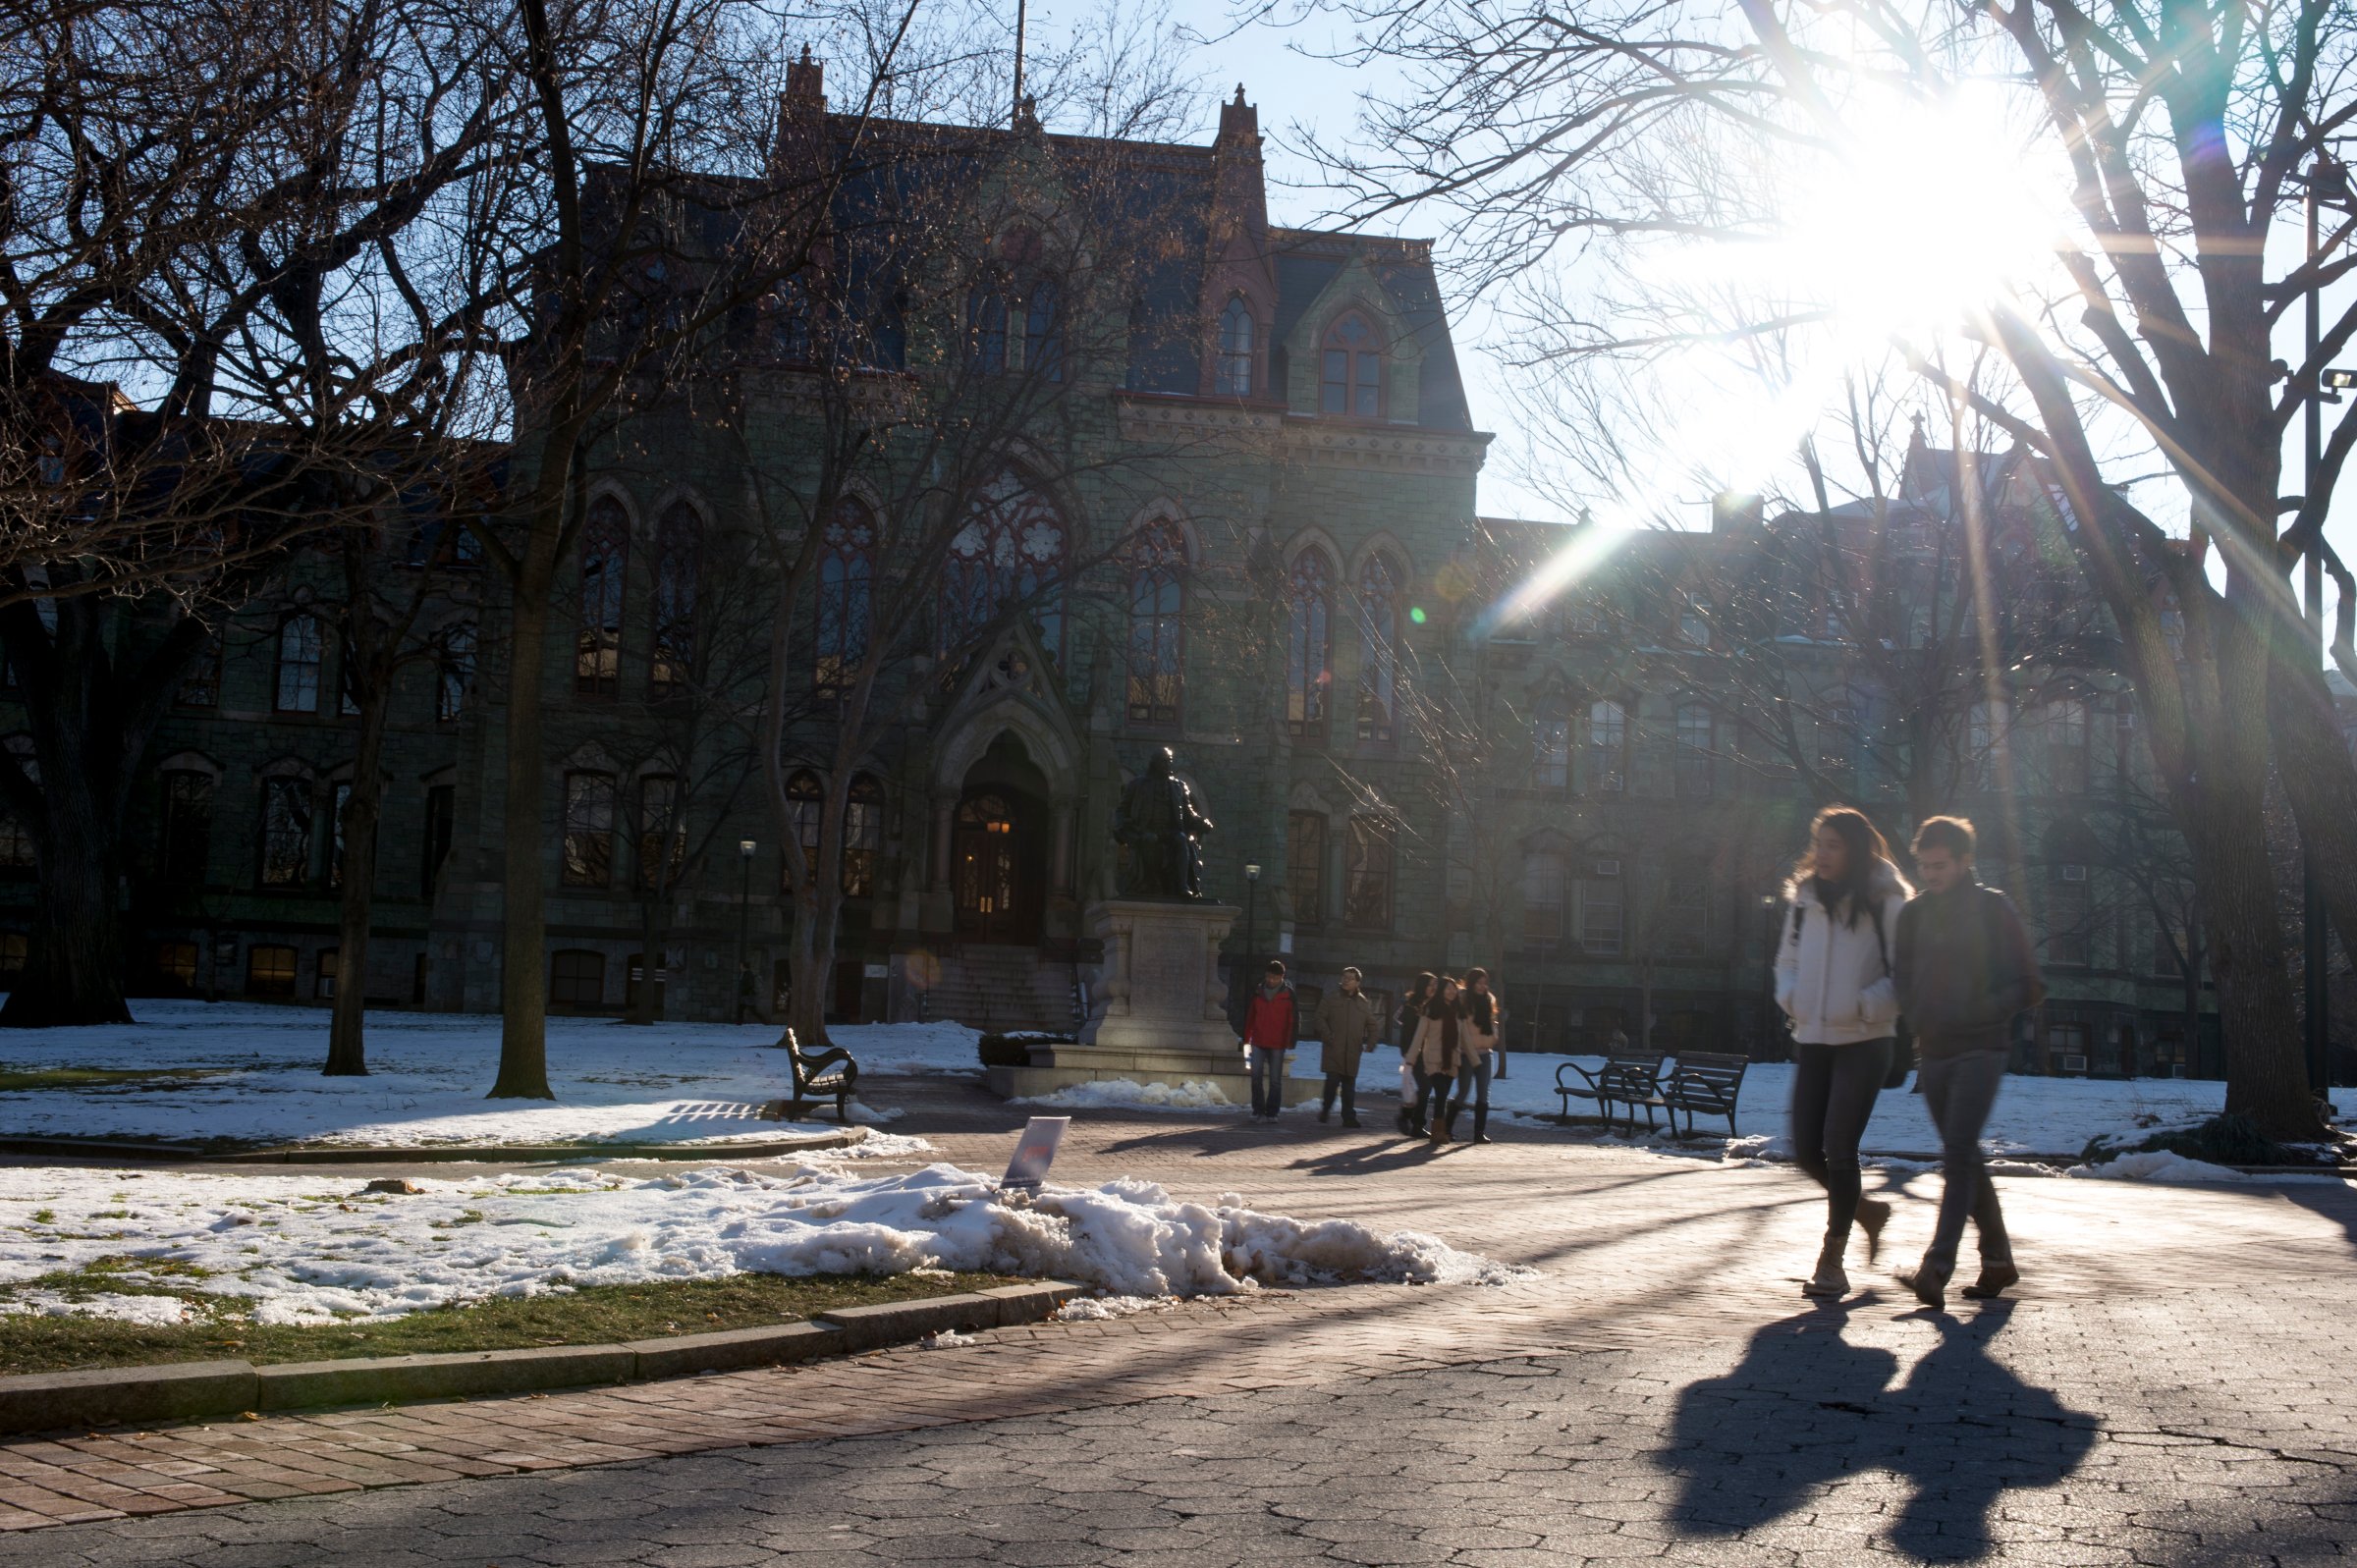 Students walk through the University of Pennsylvania campus on December 16, 2013 in Philadelphia, Pennsylvania.